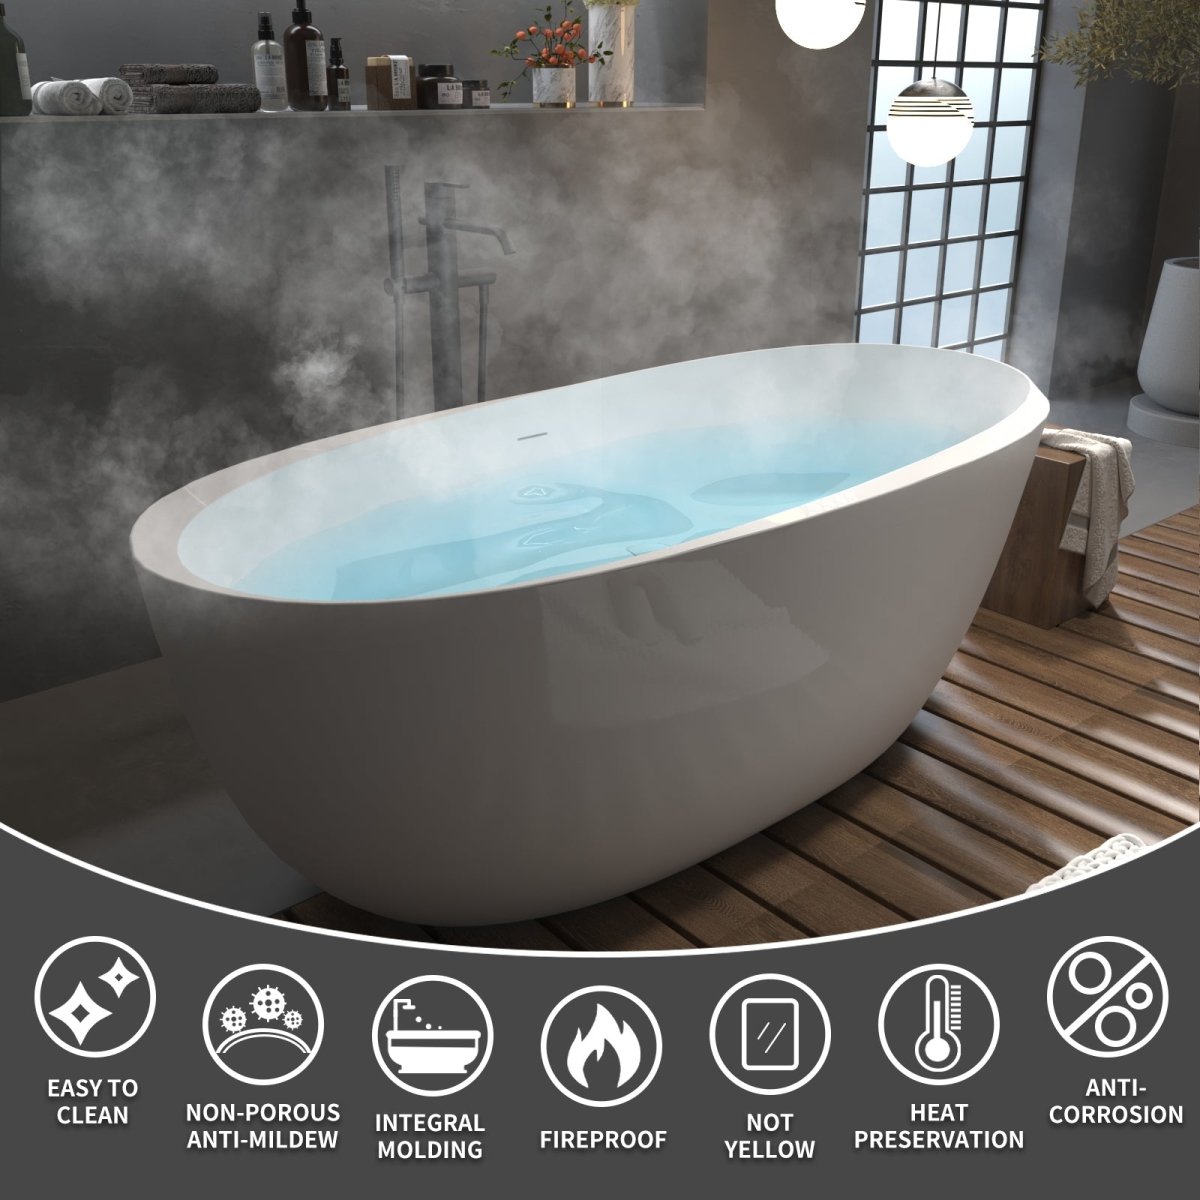 ExBrite 67" Acrylic Free Standing Tub Classic Oval Shape Soaking Tub, Adjustable Freestanding Bathtub Gloss White